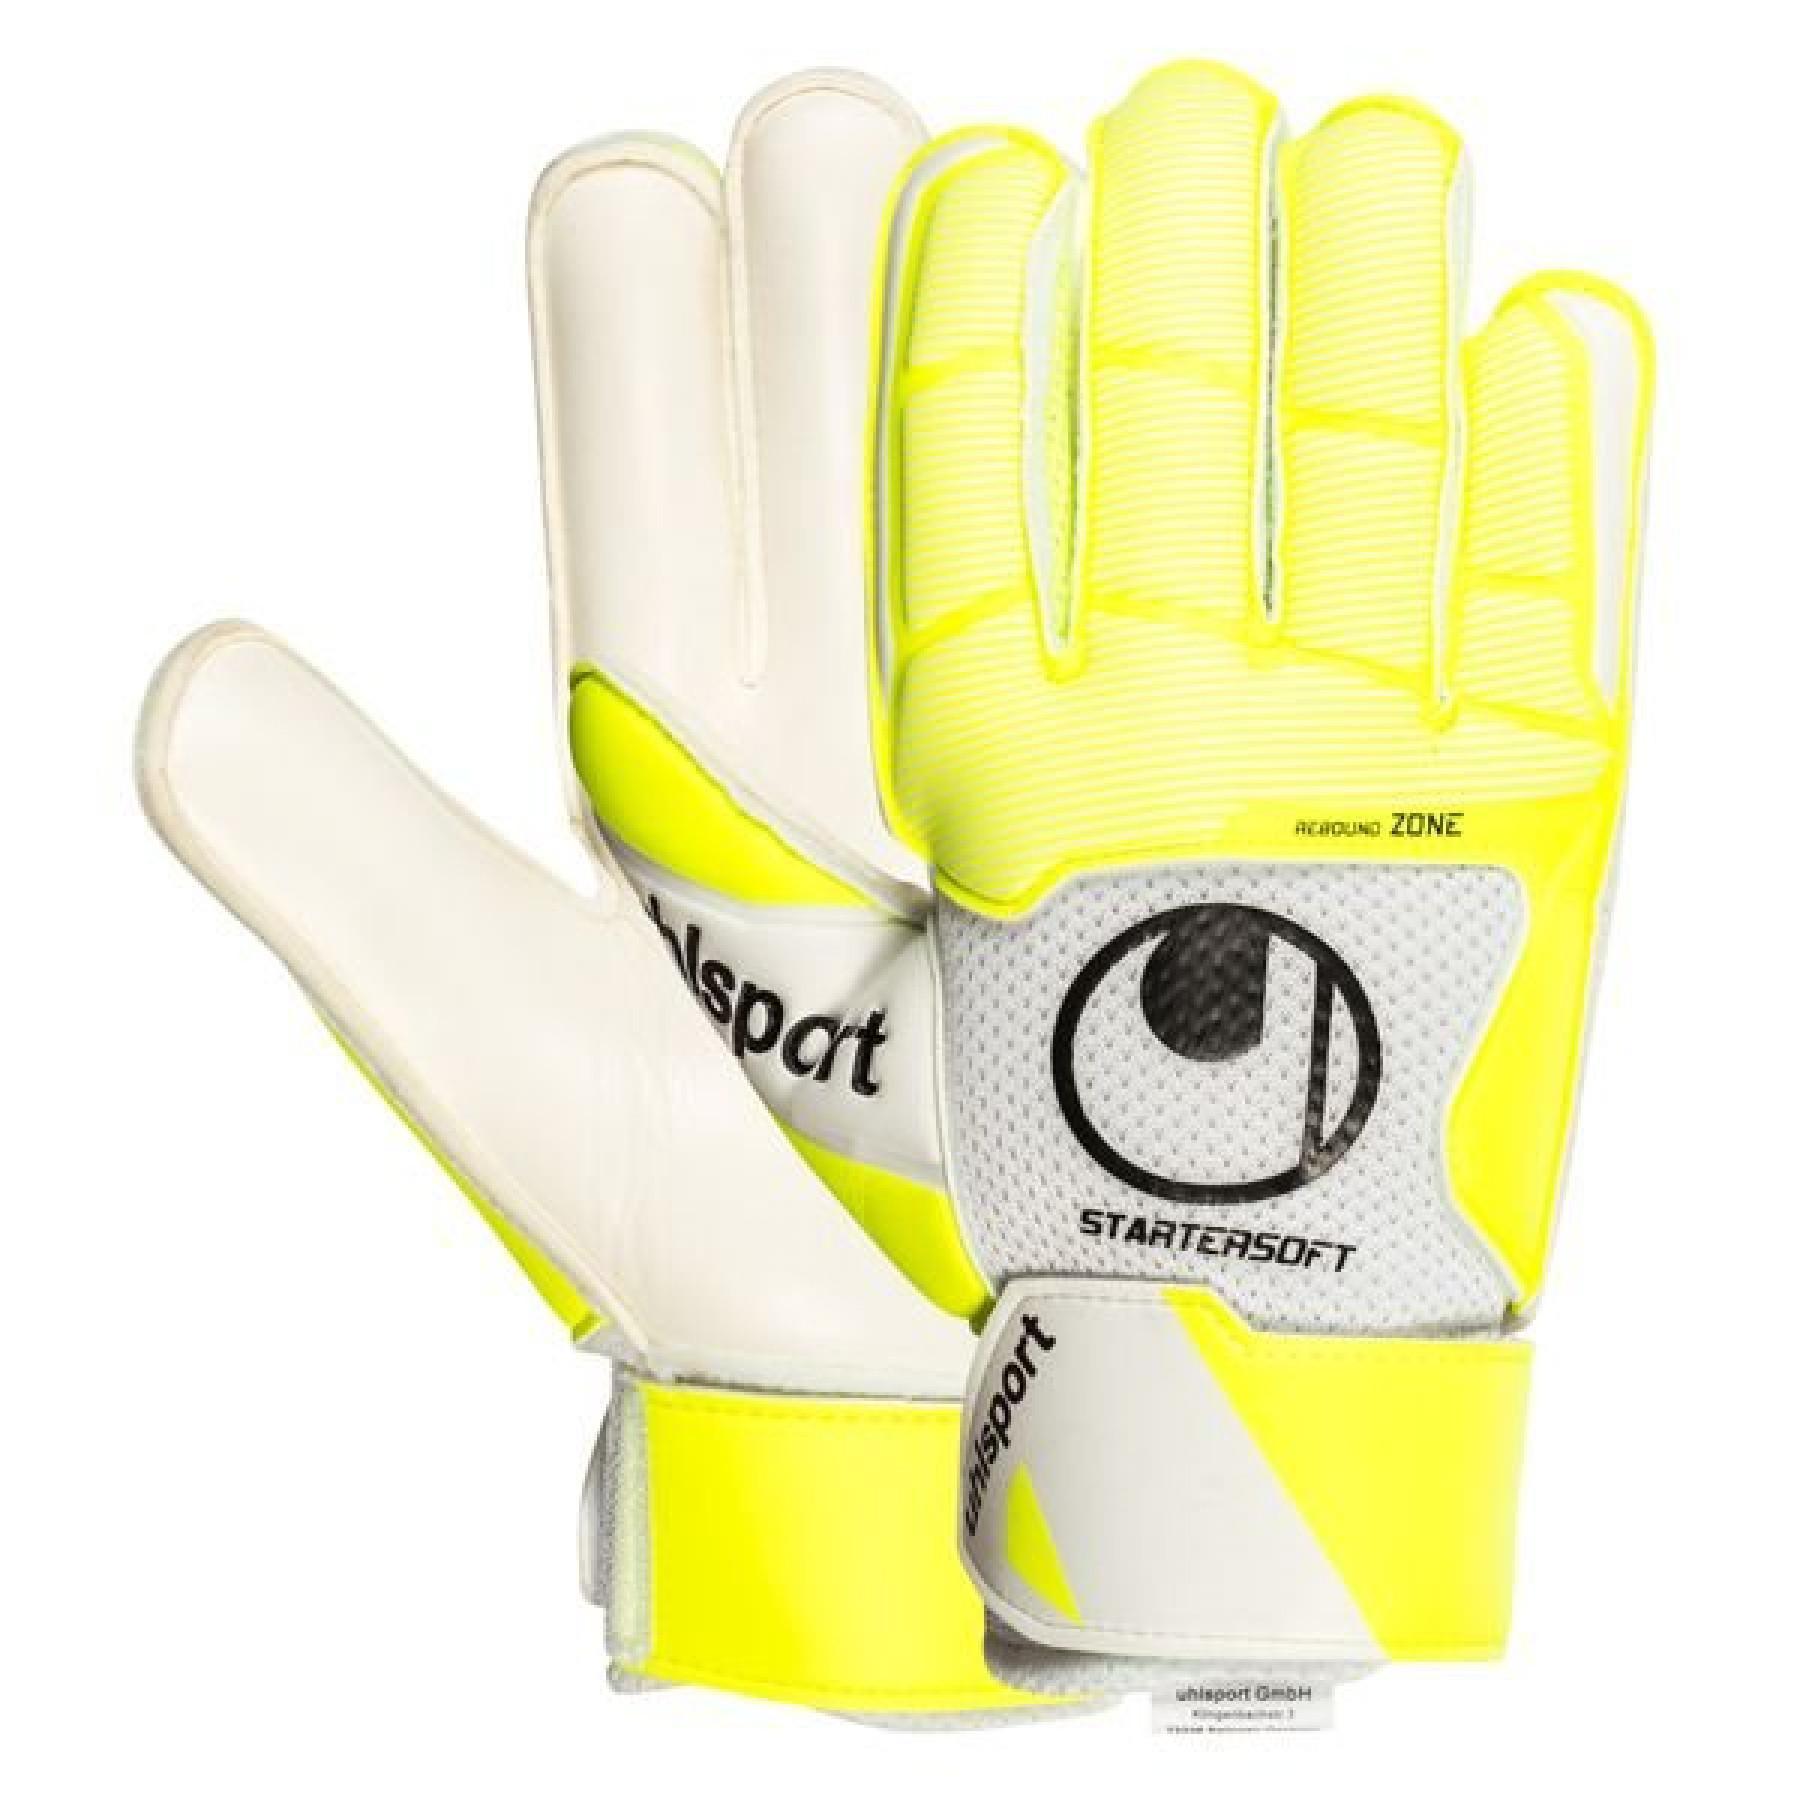 Goalkeeper gloves Uhlsport Pure Alliance Starter Soft Aréola #293